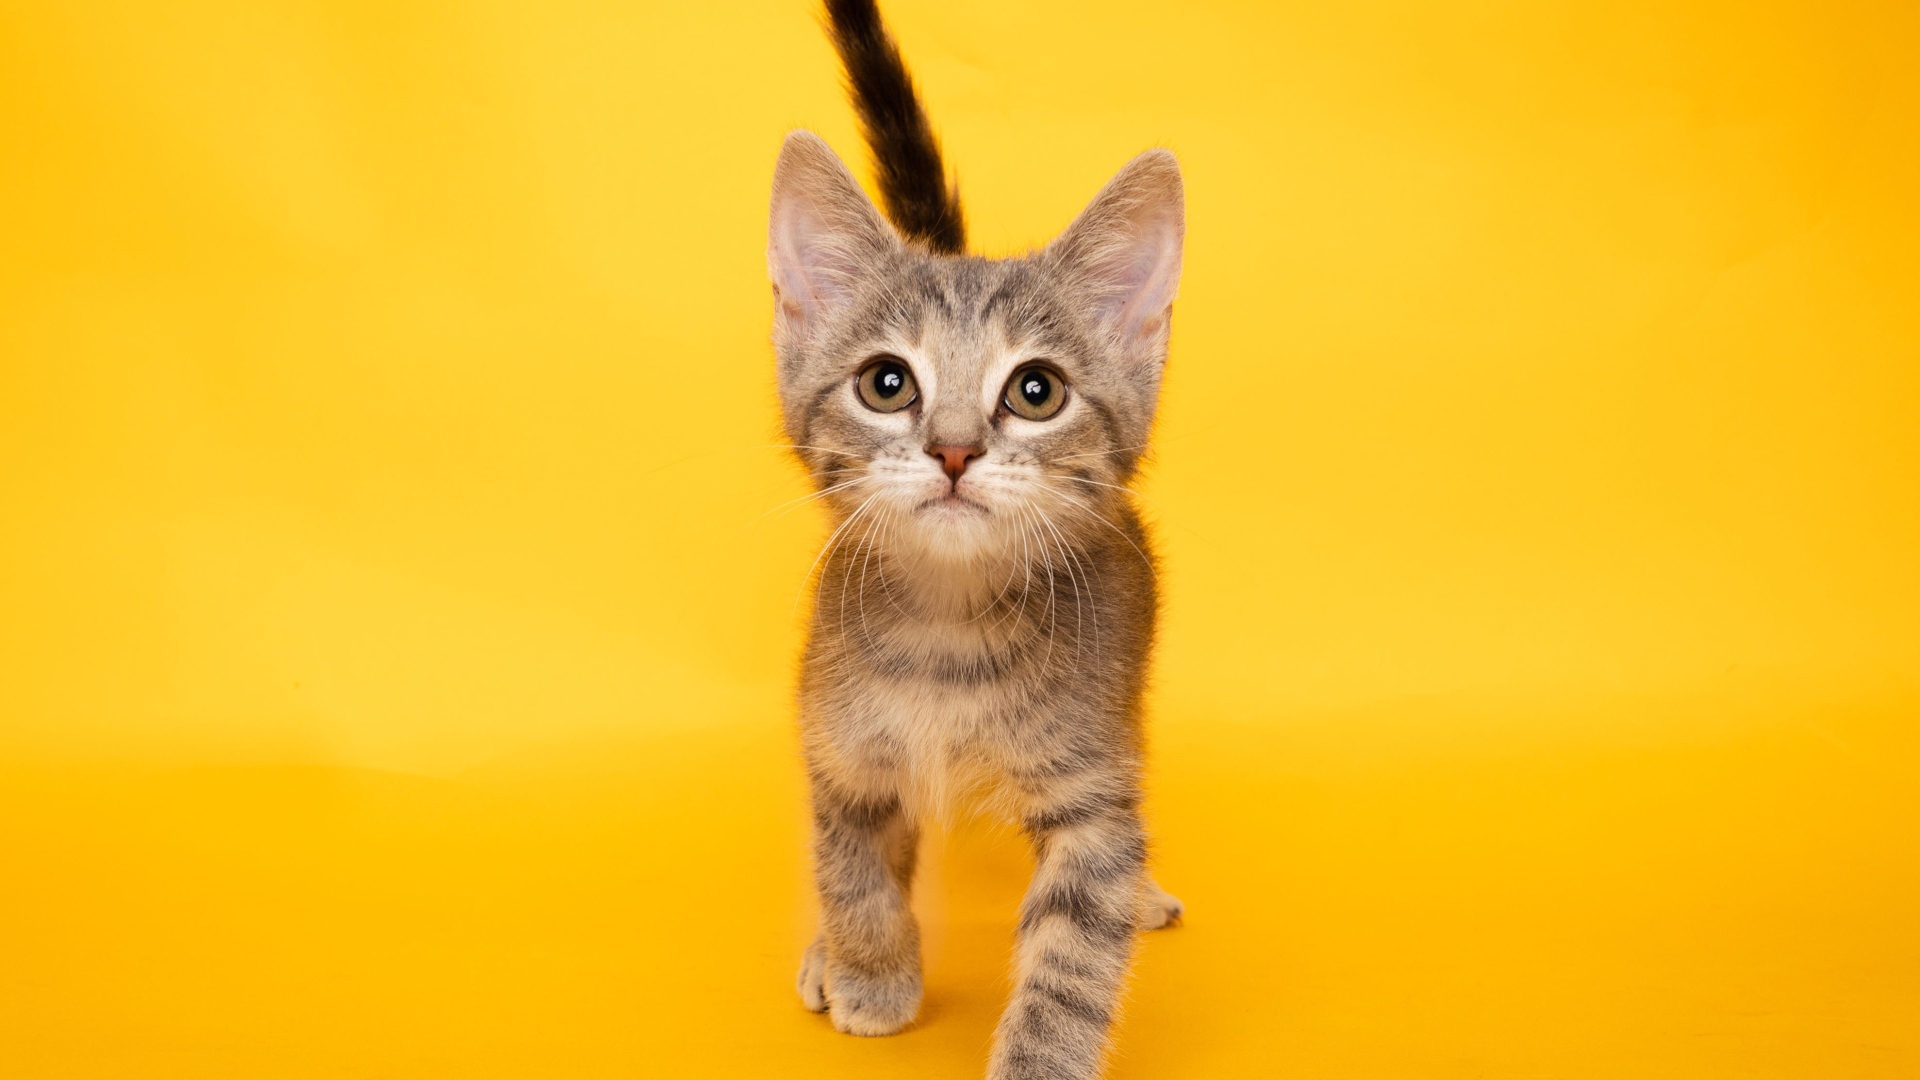 Cute gray kitten on an orange background